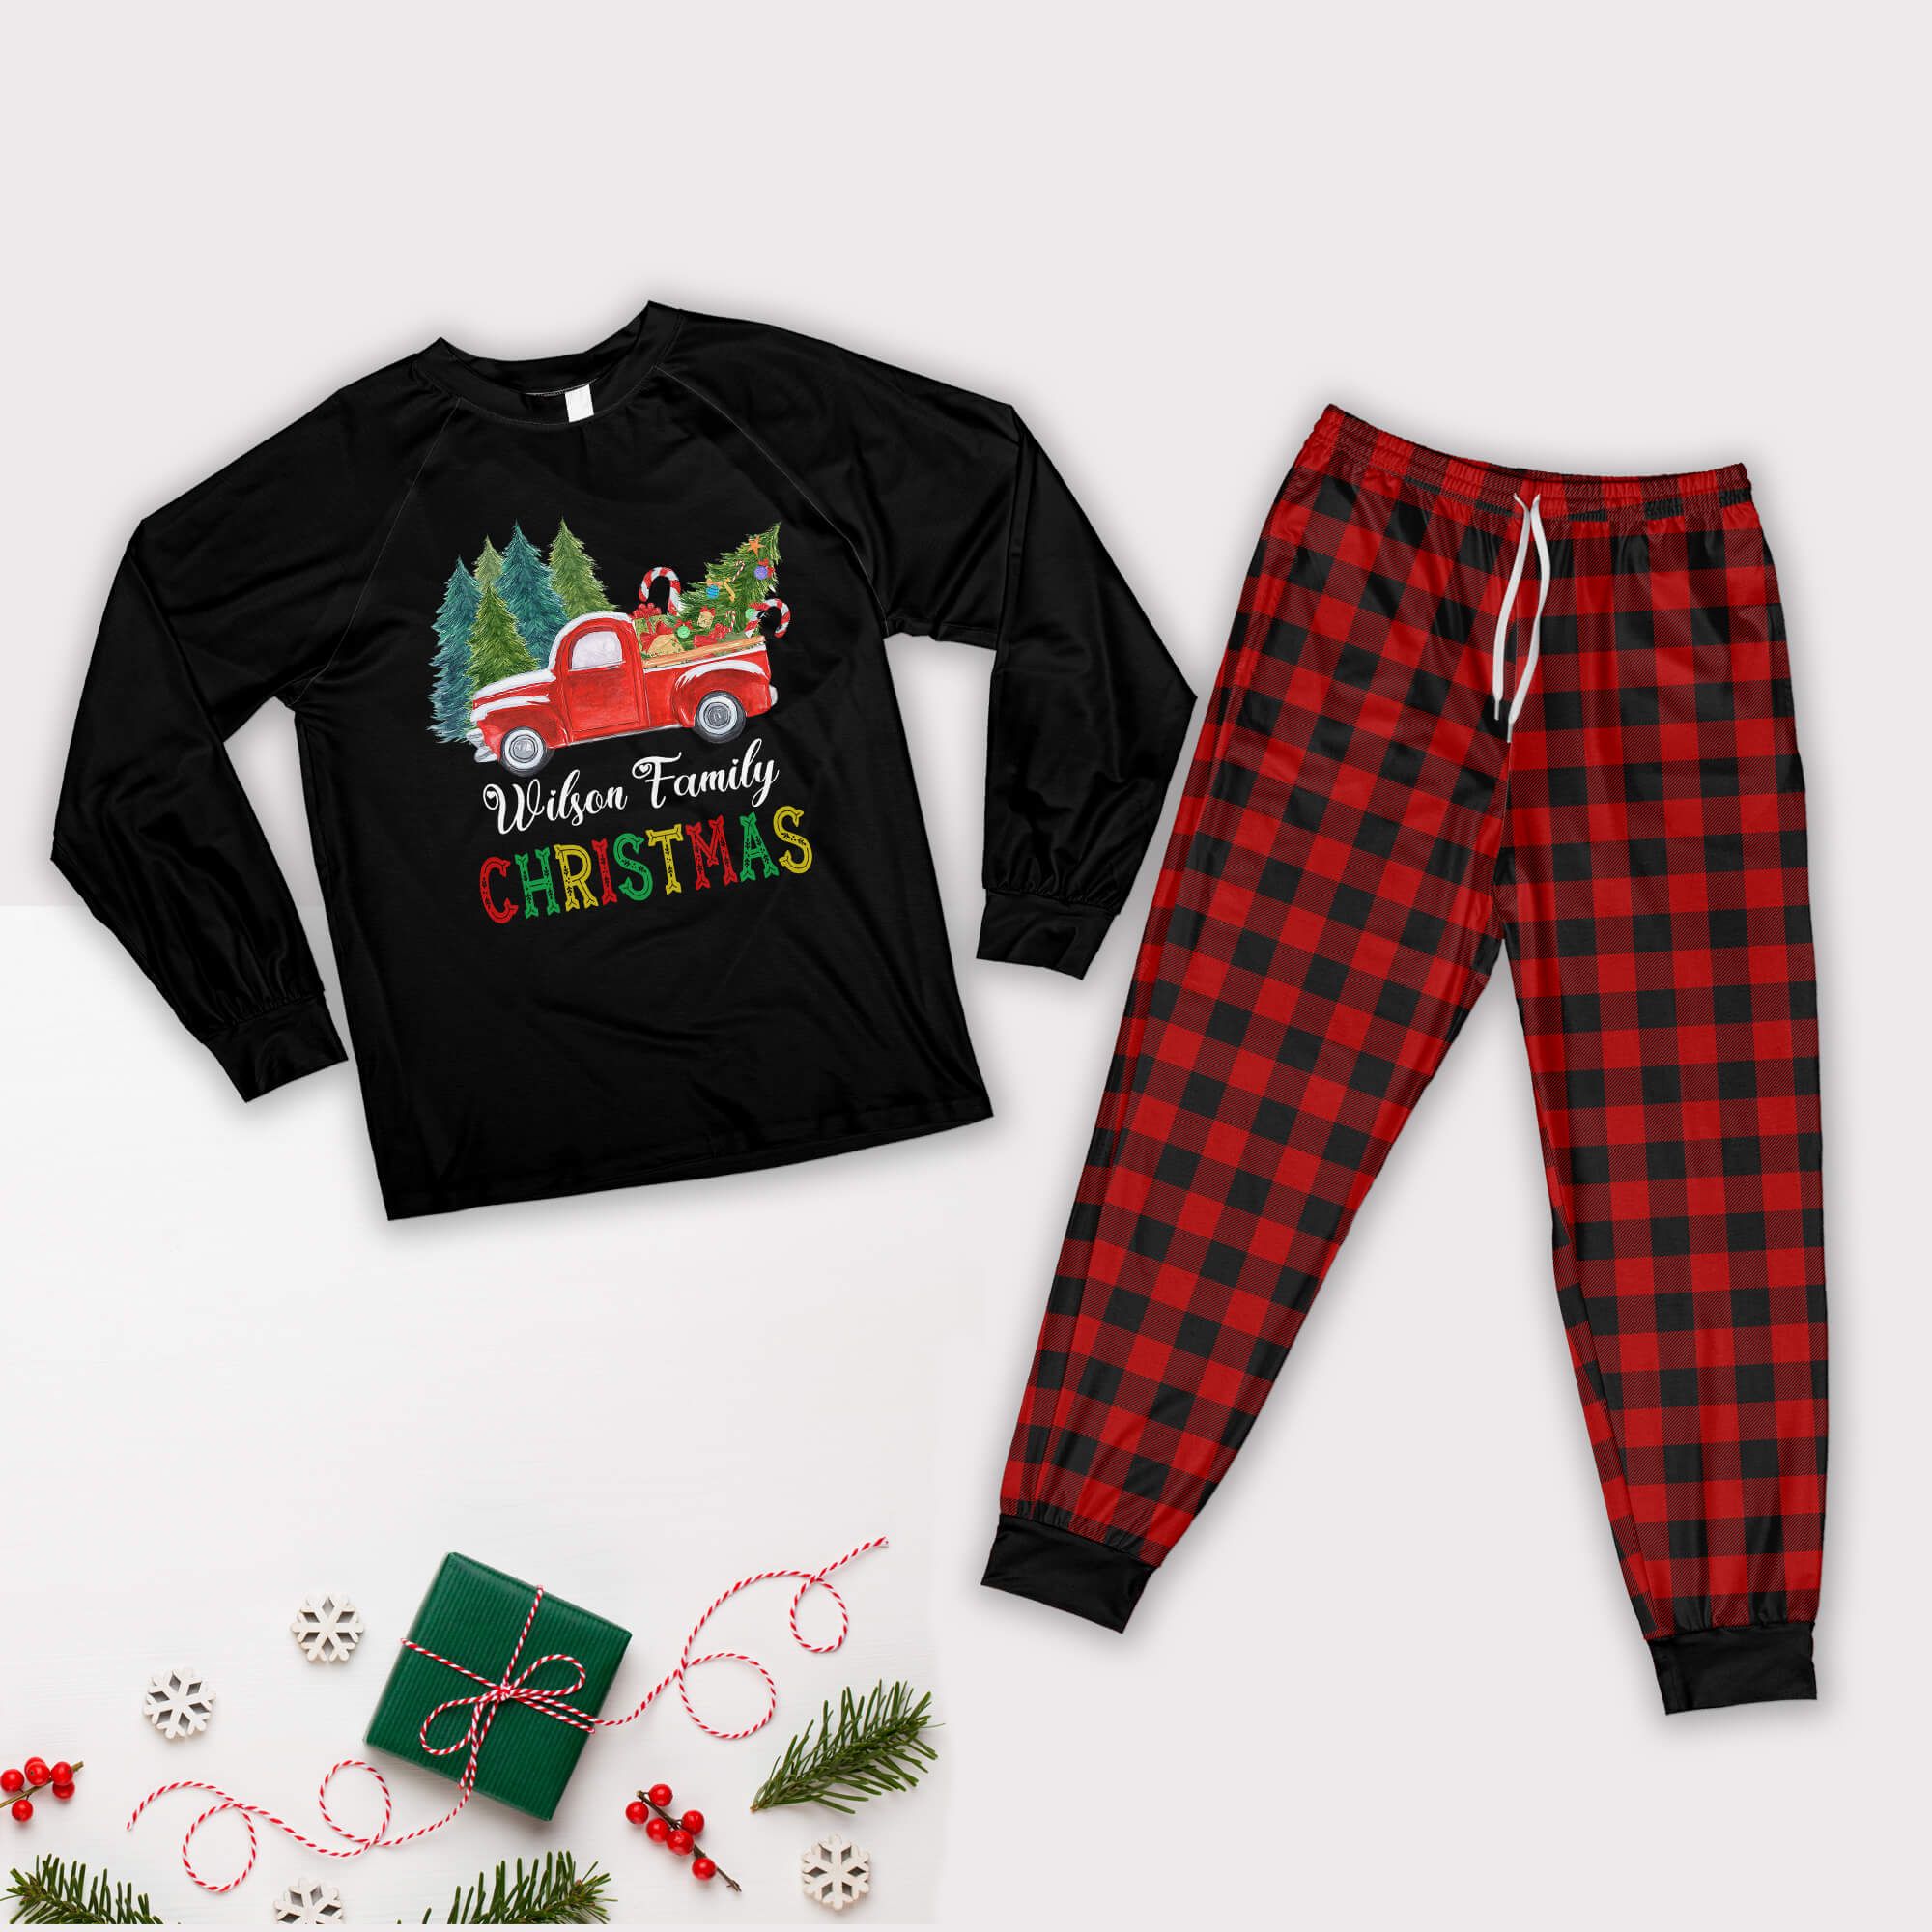 Red Truck Christmas Tree Pajamas Personalized Names Family Christmas Pajamas Set Pajamas Shirt Black XS